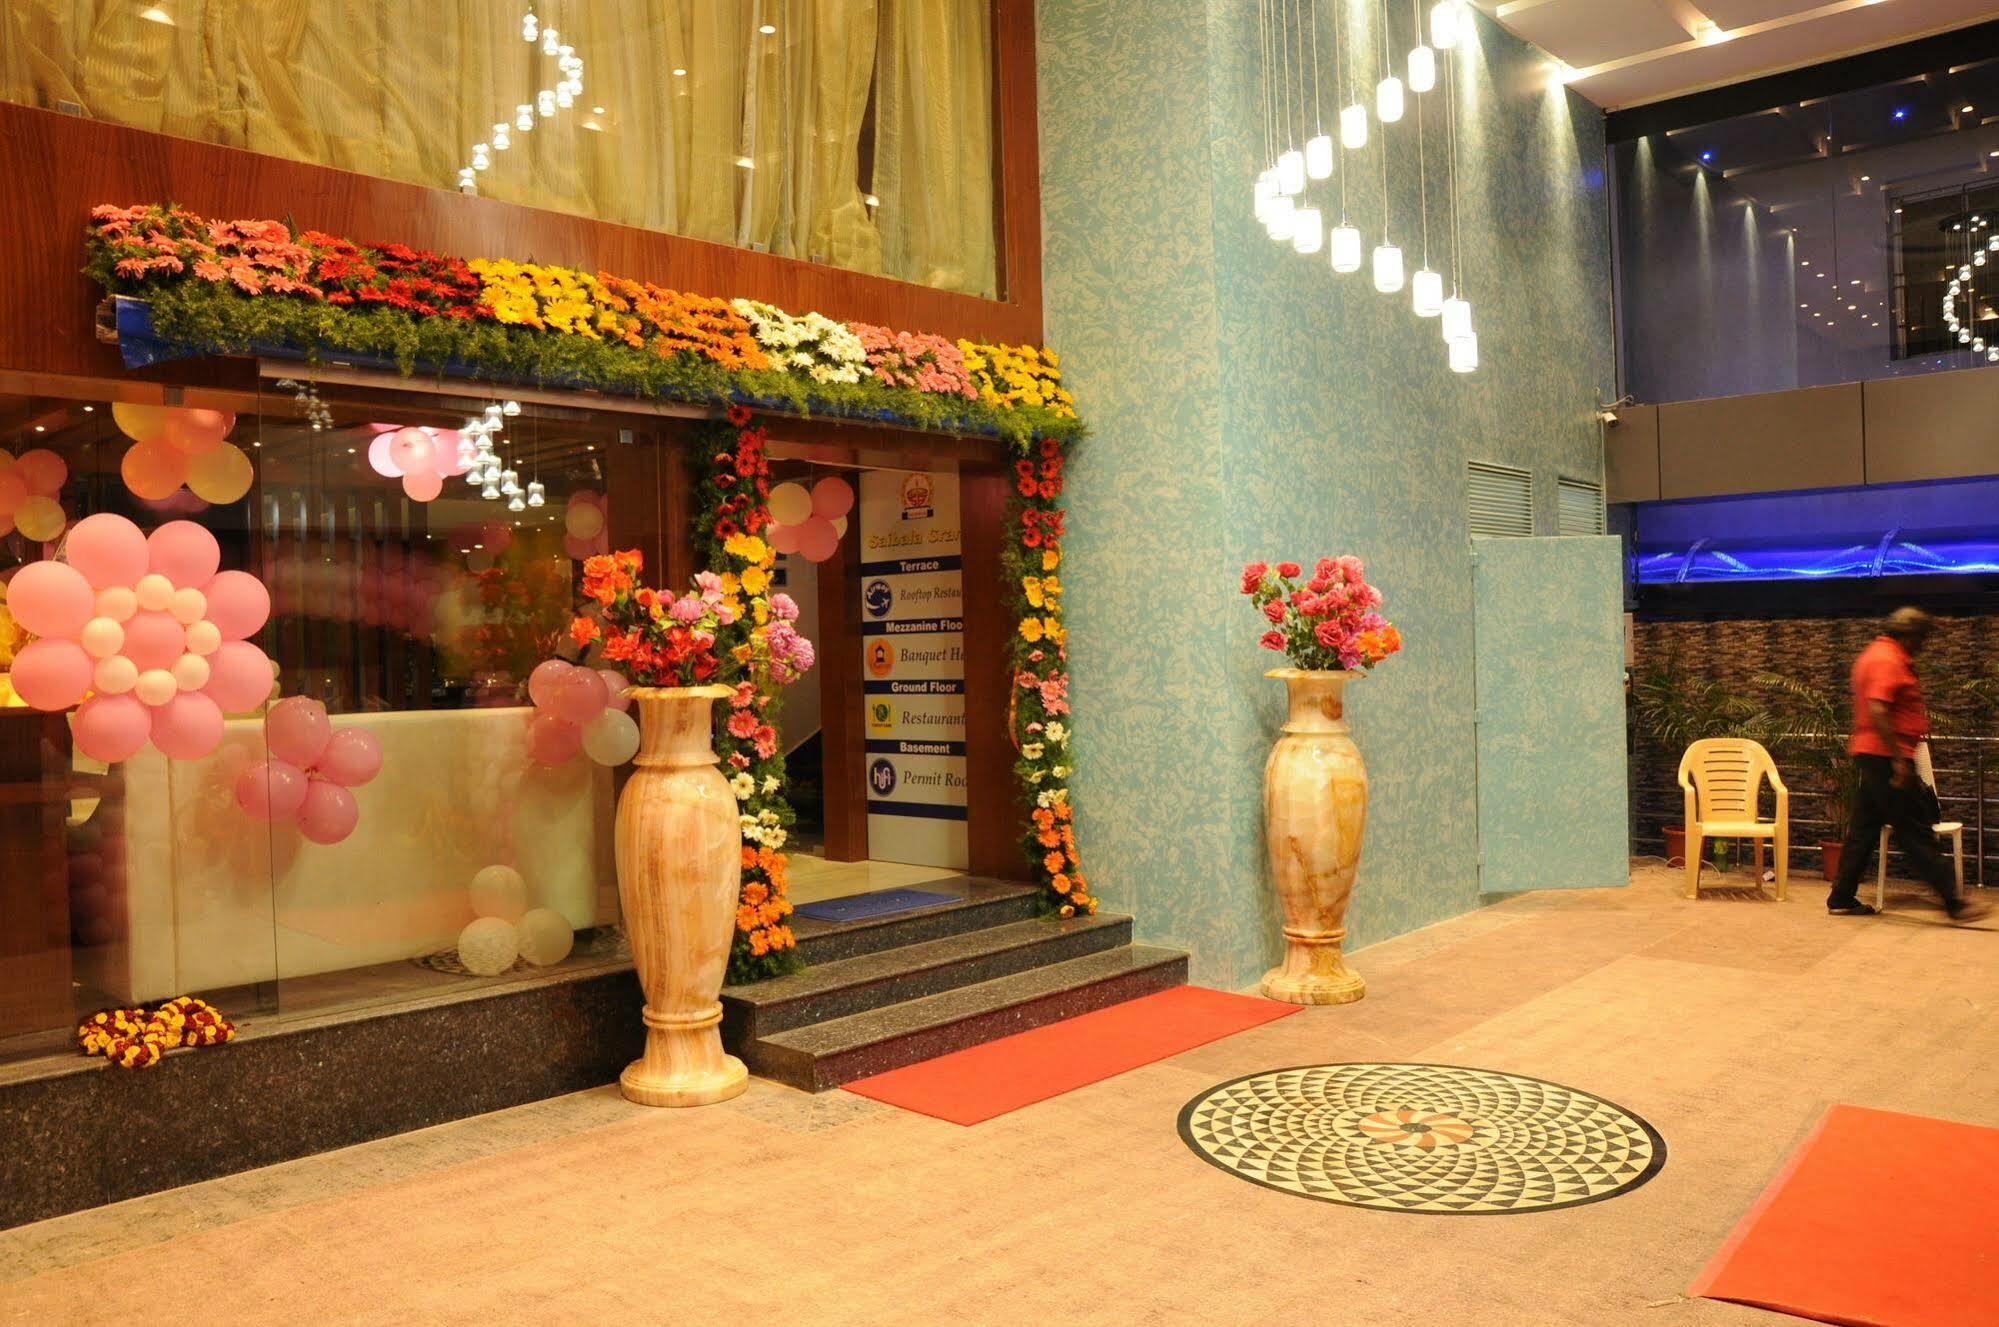 Saibala Grand Airport Hotel Ченнаи Экстерьер фото